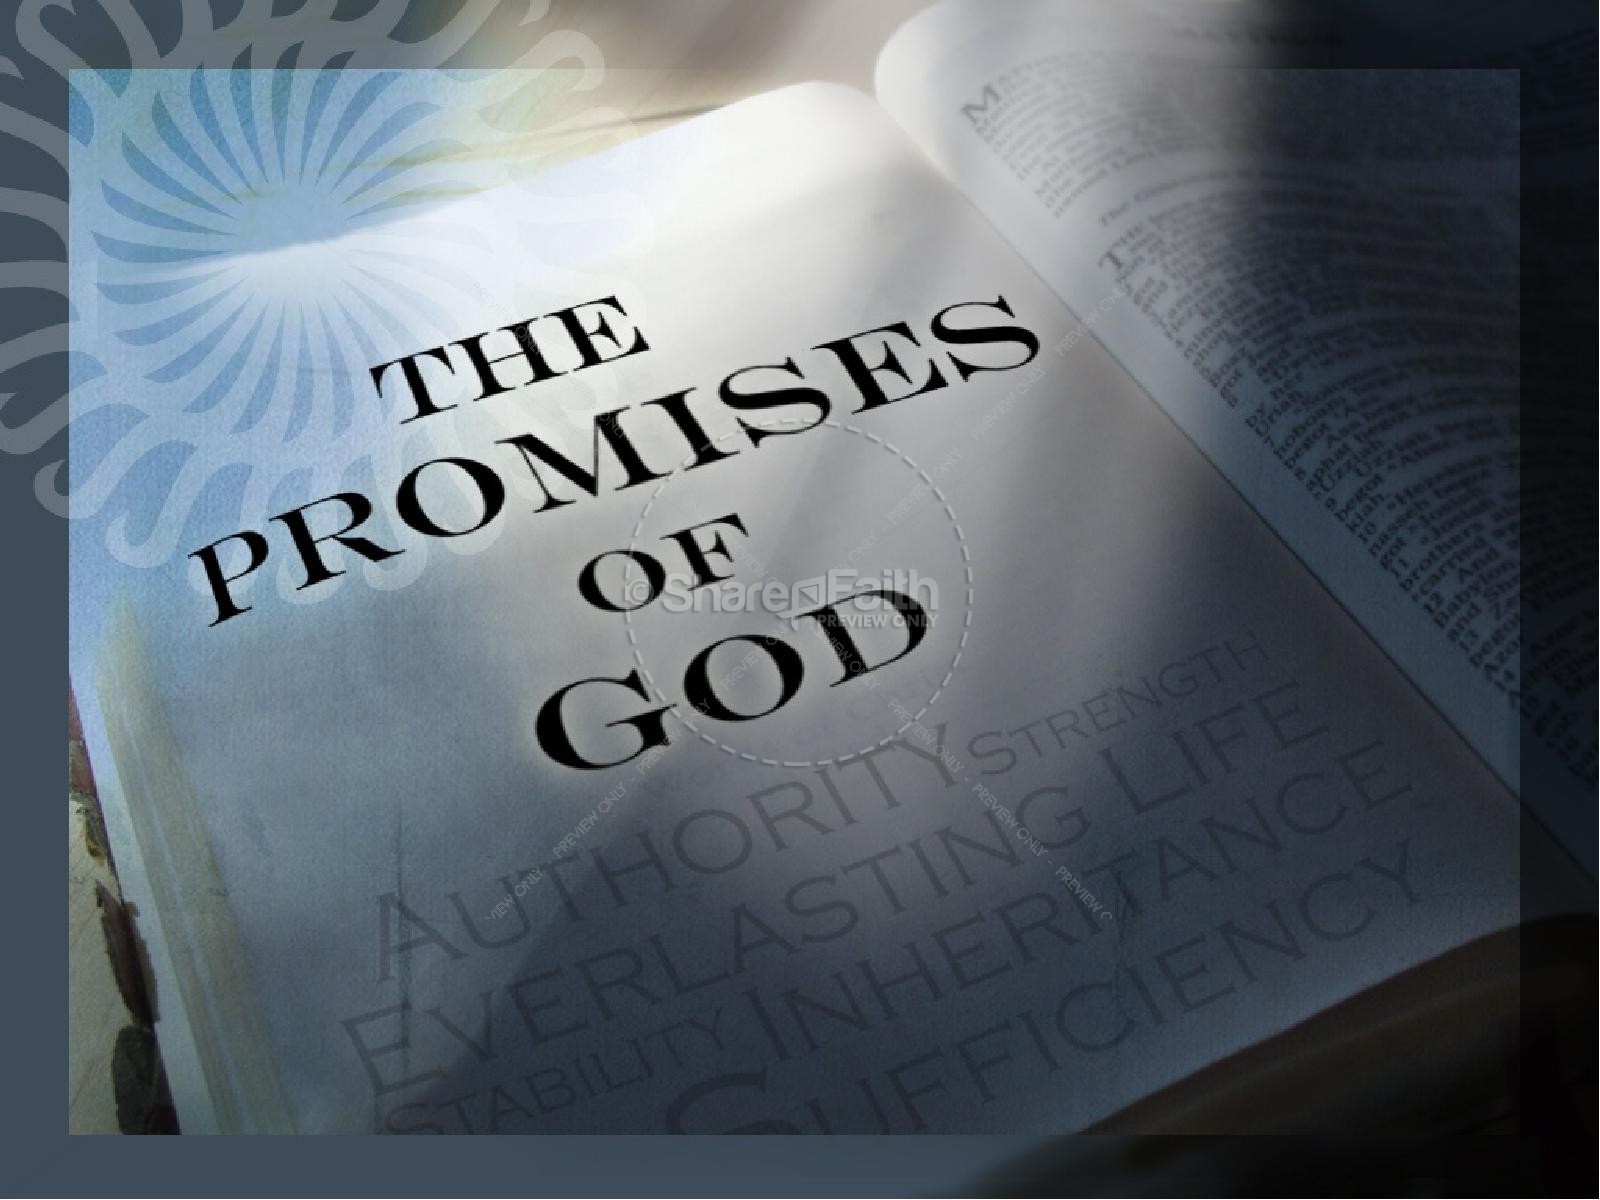 Promises of God PowerPoint Thumbnail 1